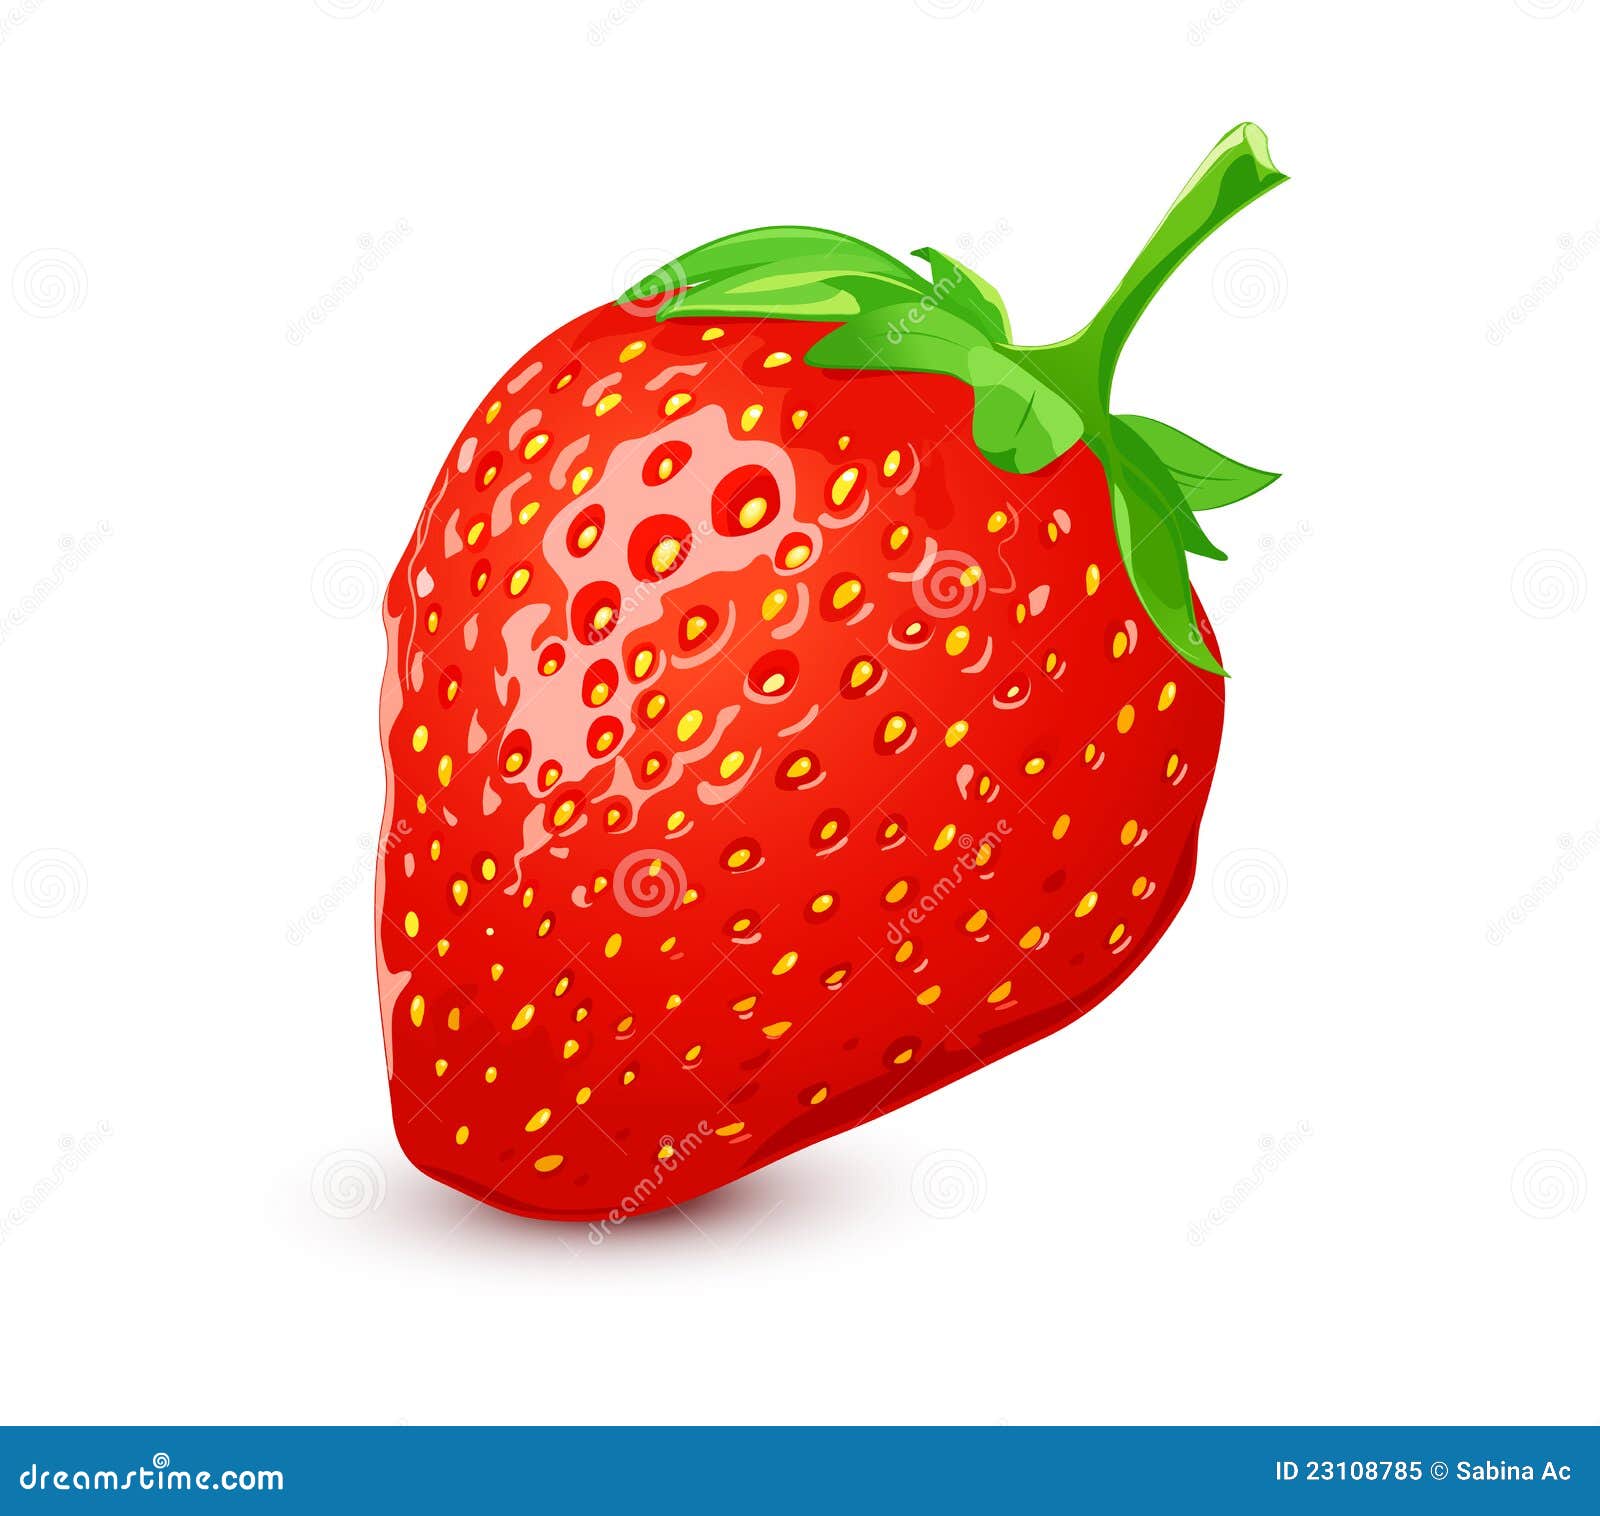 clipart kostenlos erdbeere - photo #8